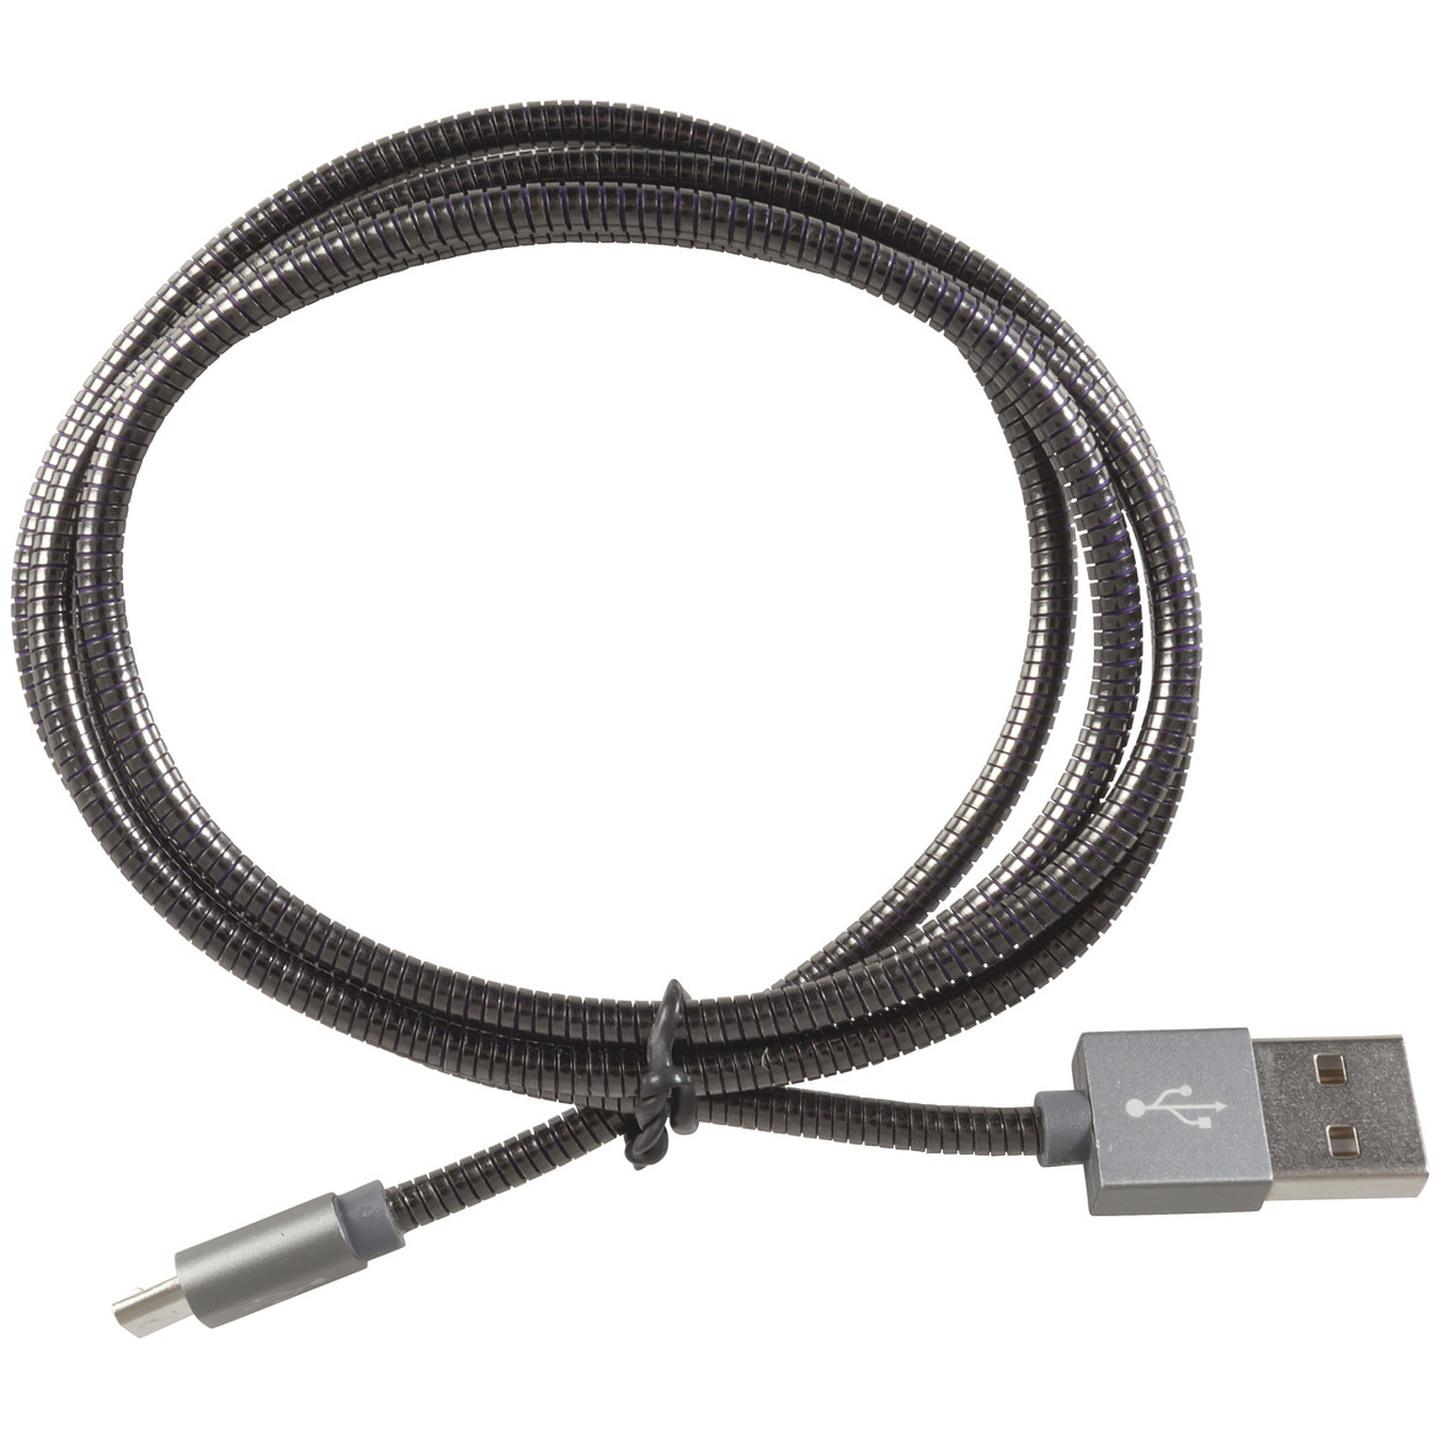 Micro B Armoured USB Cable